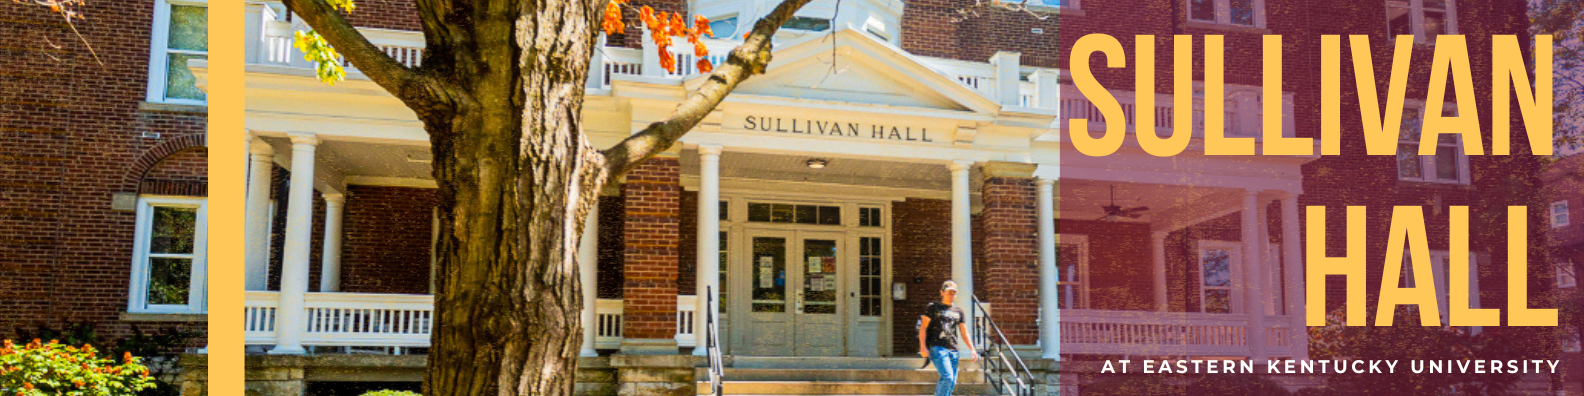 An image of Sullivan Hall at EKU, with the text "Sullivan Hall".